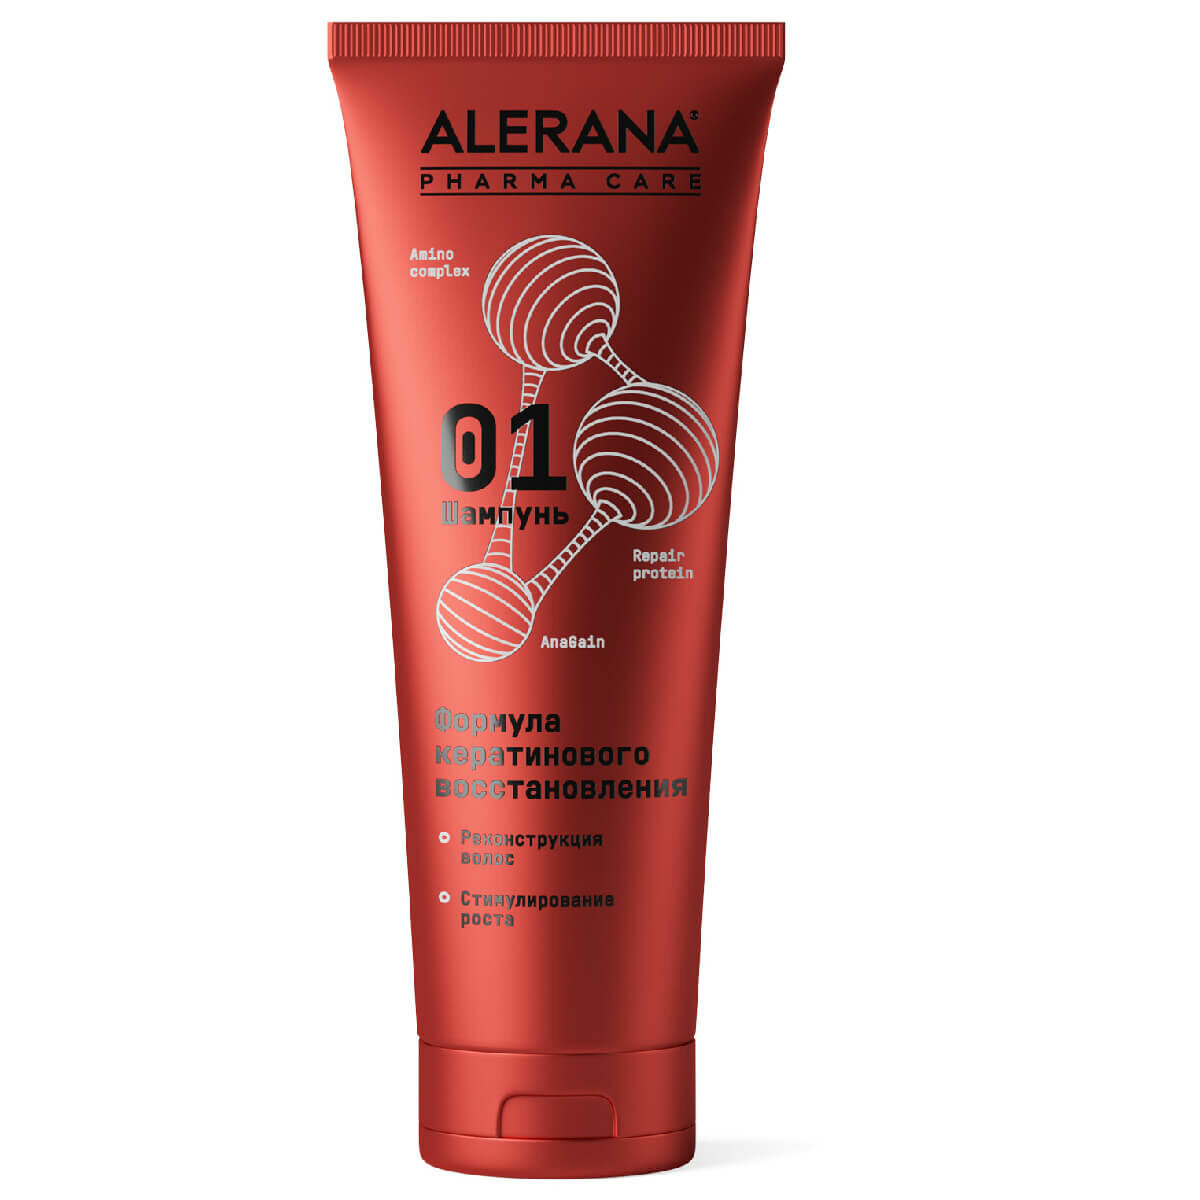 Alerana Pharma Care Шампунь для волос Формула Кератинового восстановления Pharma Care, 260 мл, Alerana